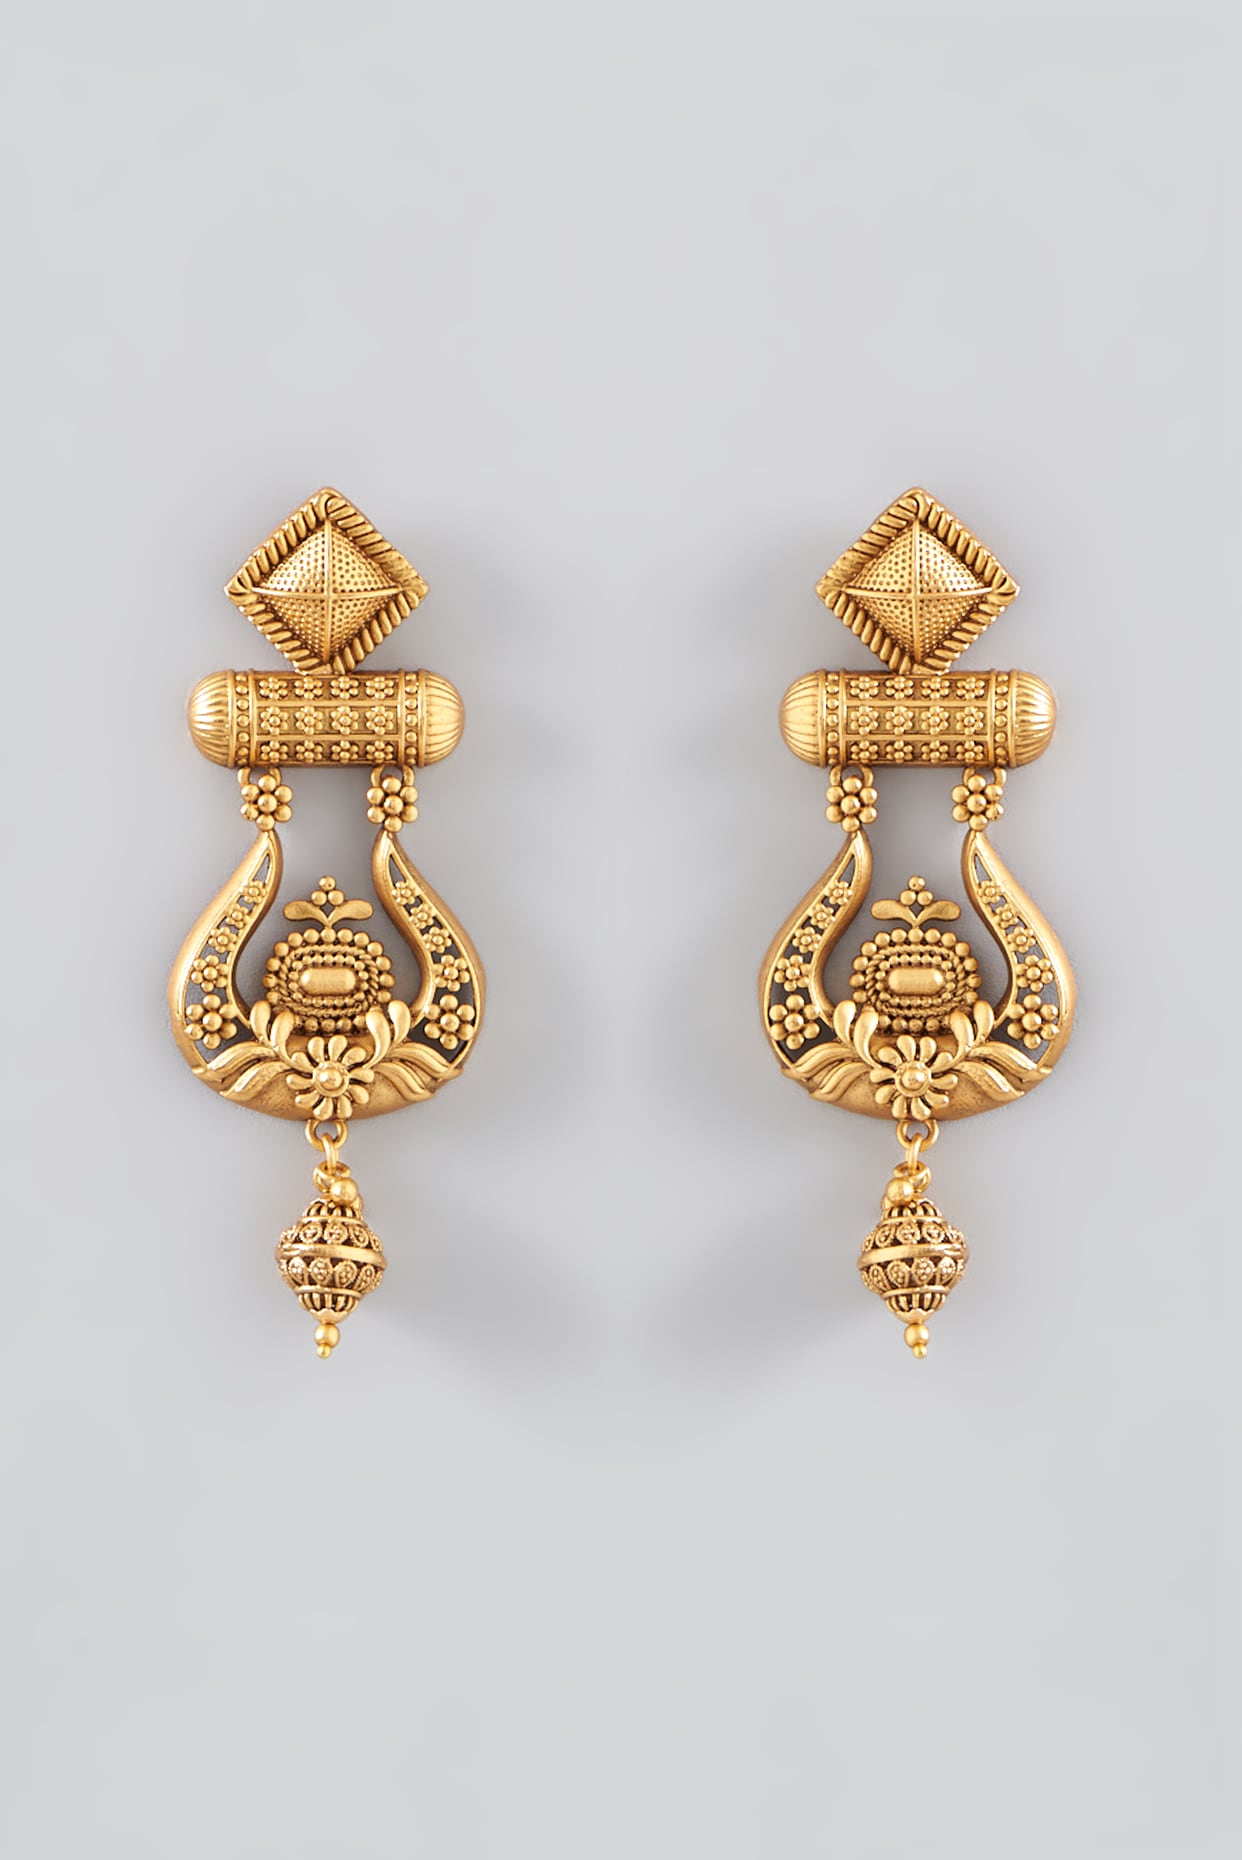 Buy 22K Yellow Gold Danglers Earrings VER2055 Online from Vaibhav Jewellers